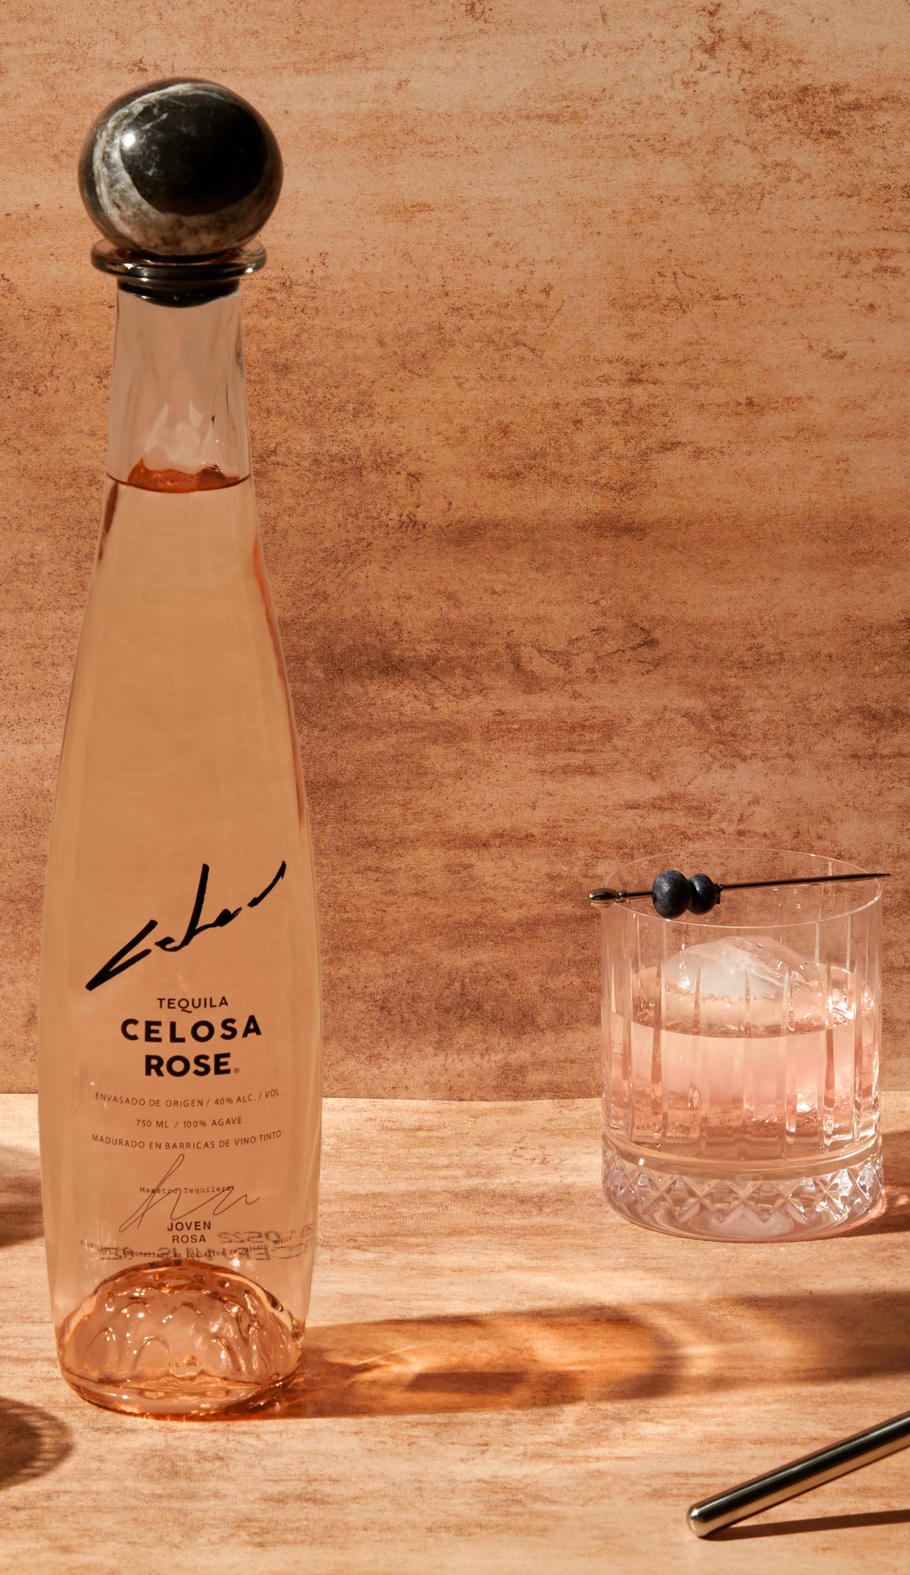 Expensive Mexican tequila - Celosa's vintage bottle